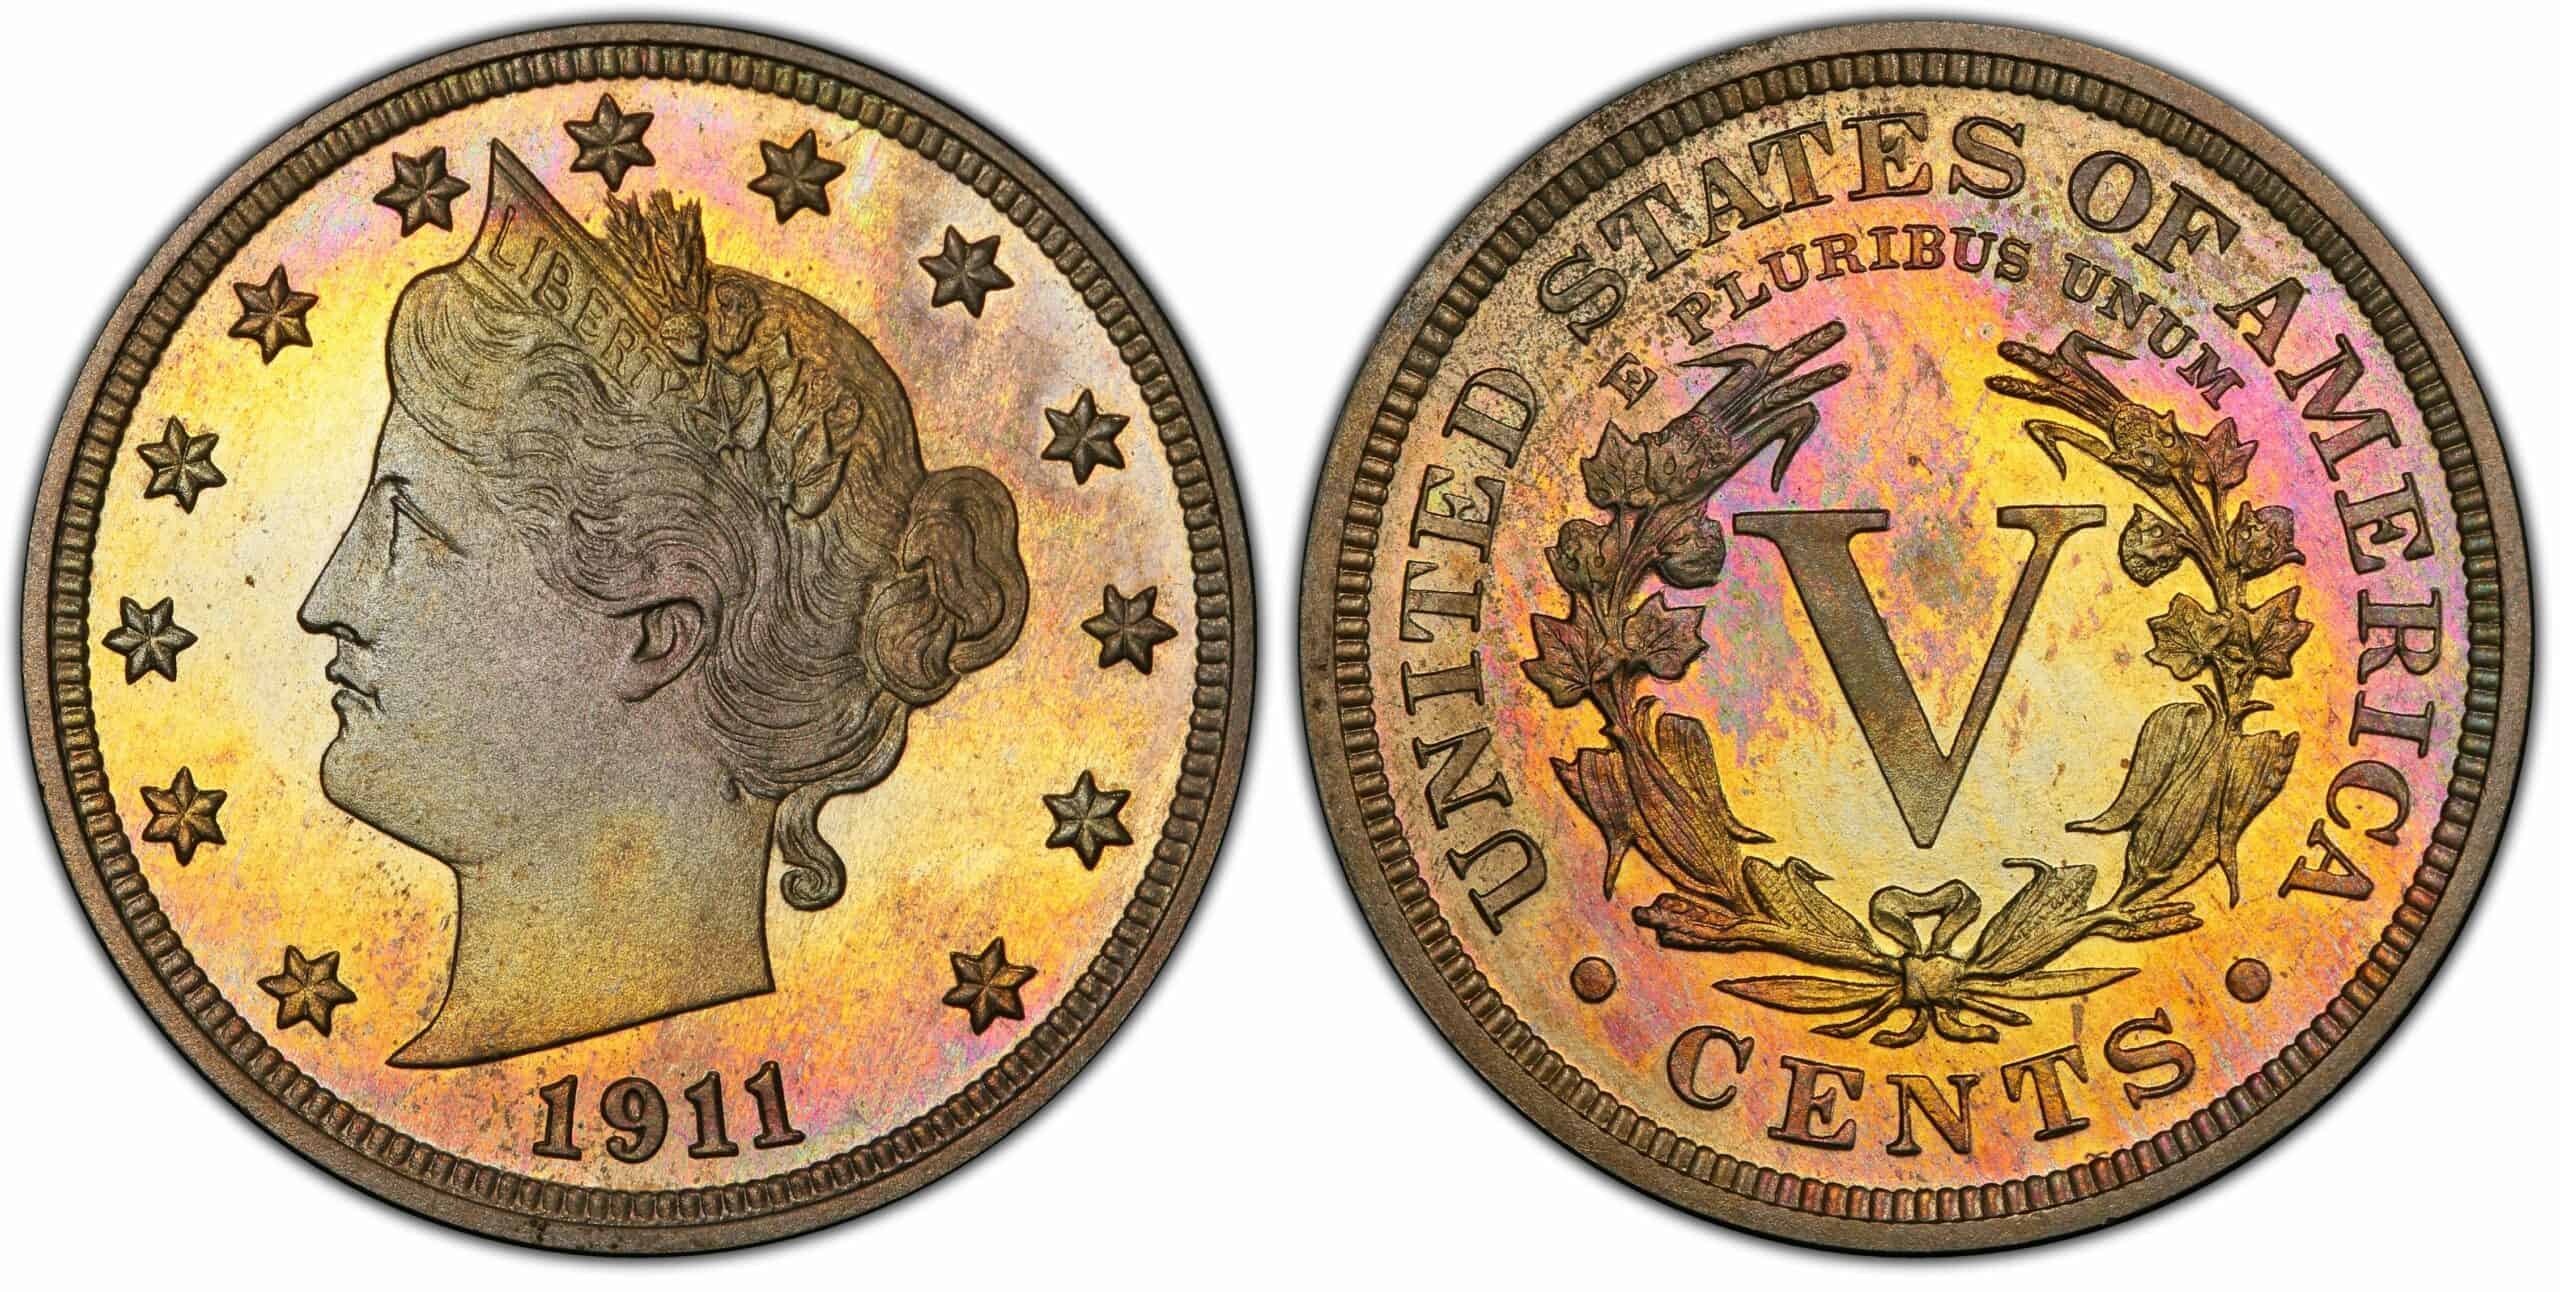 1911 Proof Nickel Value